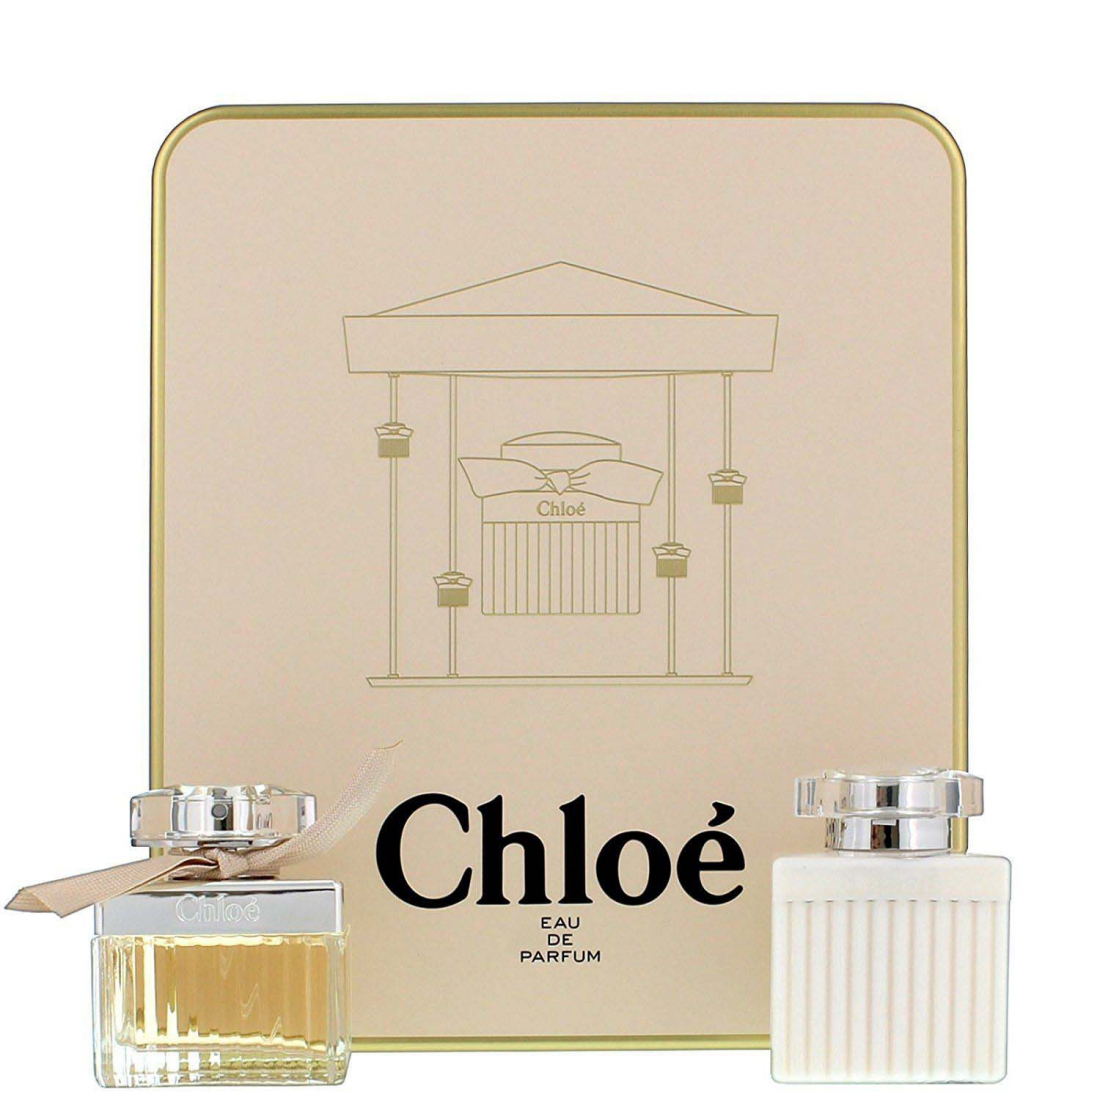 'Chloé' Parfüm Set - 2 Stücke